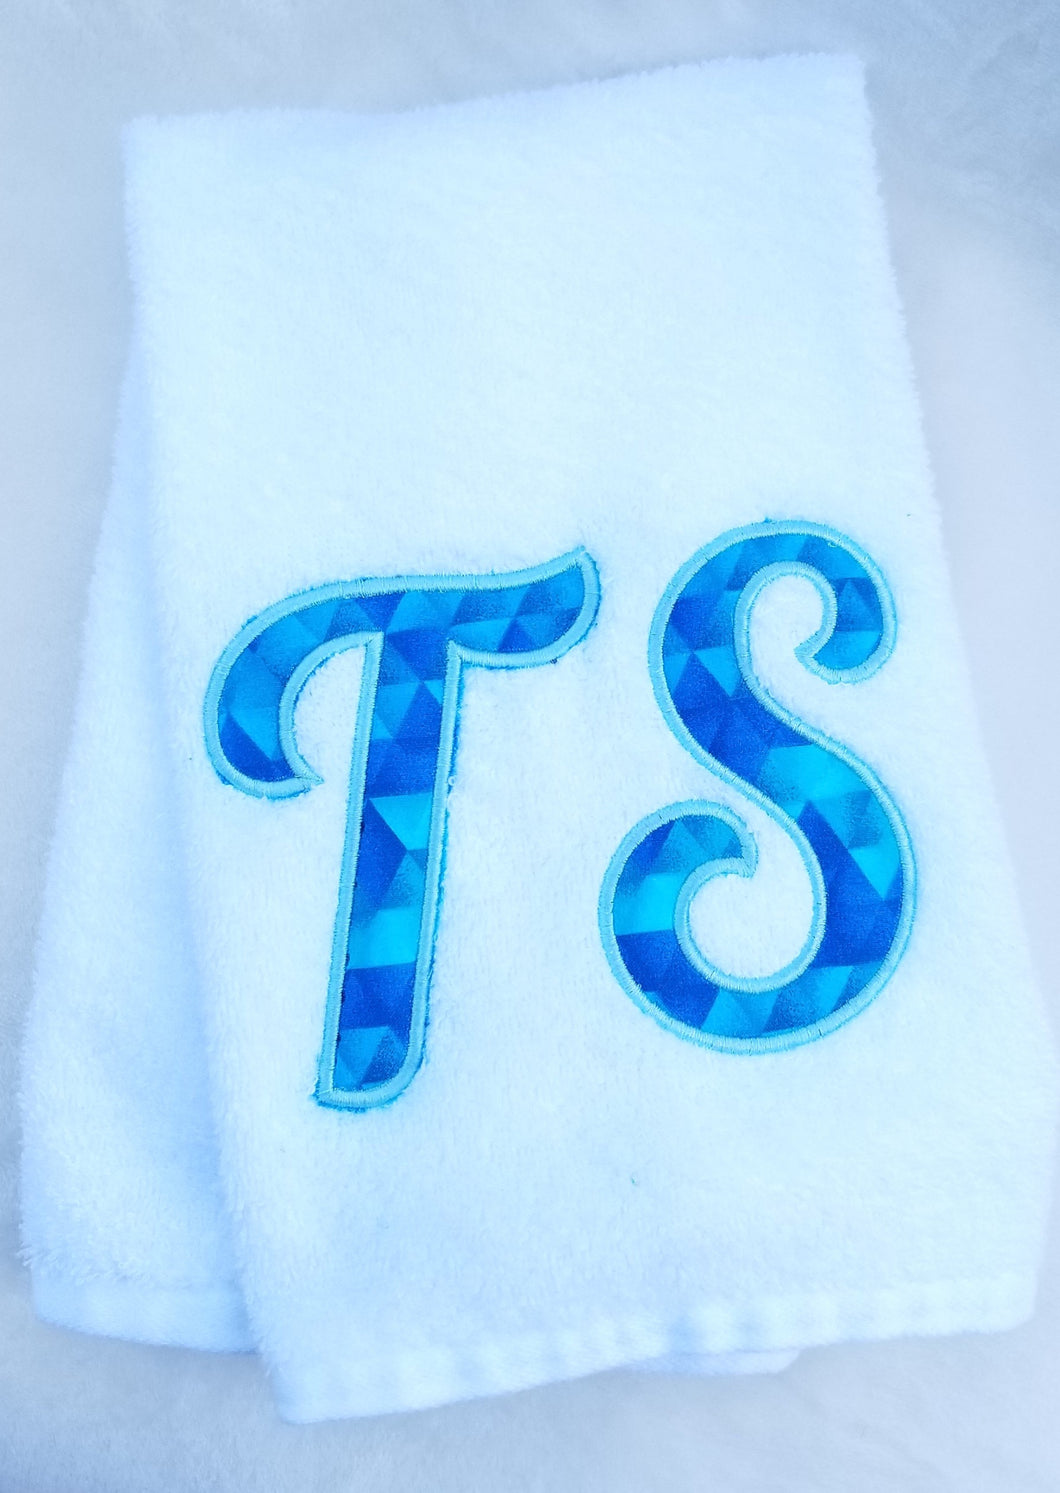 Hand Towel Custom Embroidered Applique White Kitchen Bath Towel